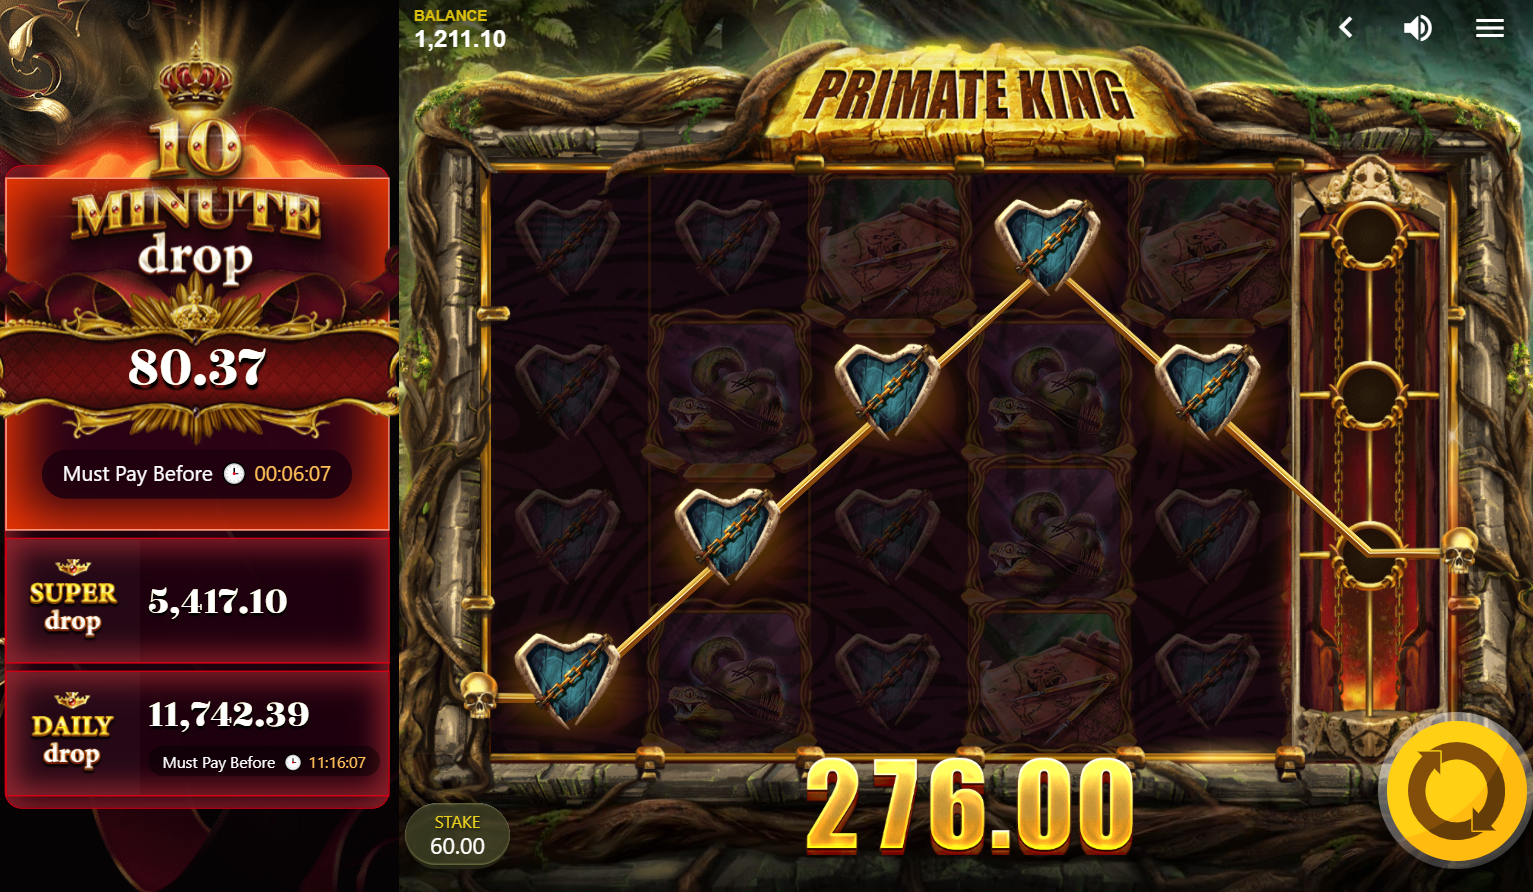 Primate King Slot Big Win